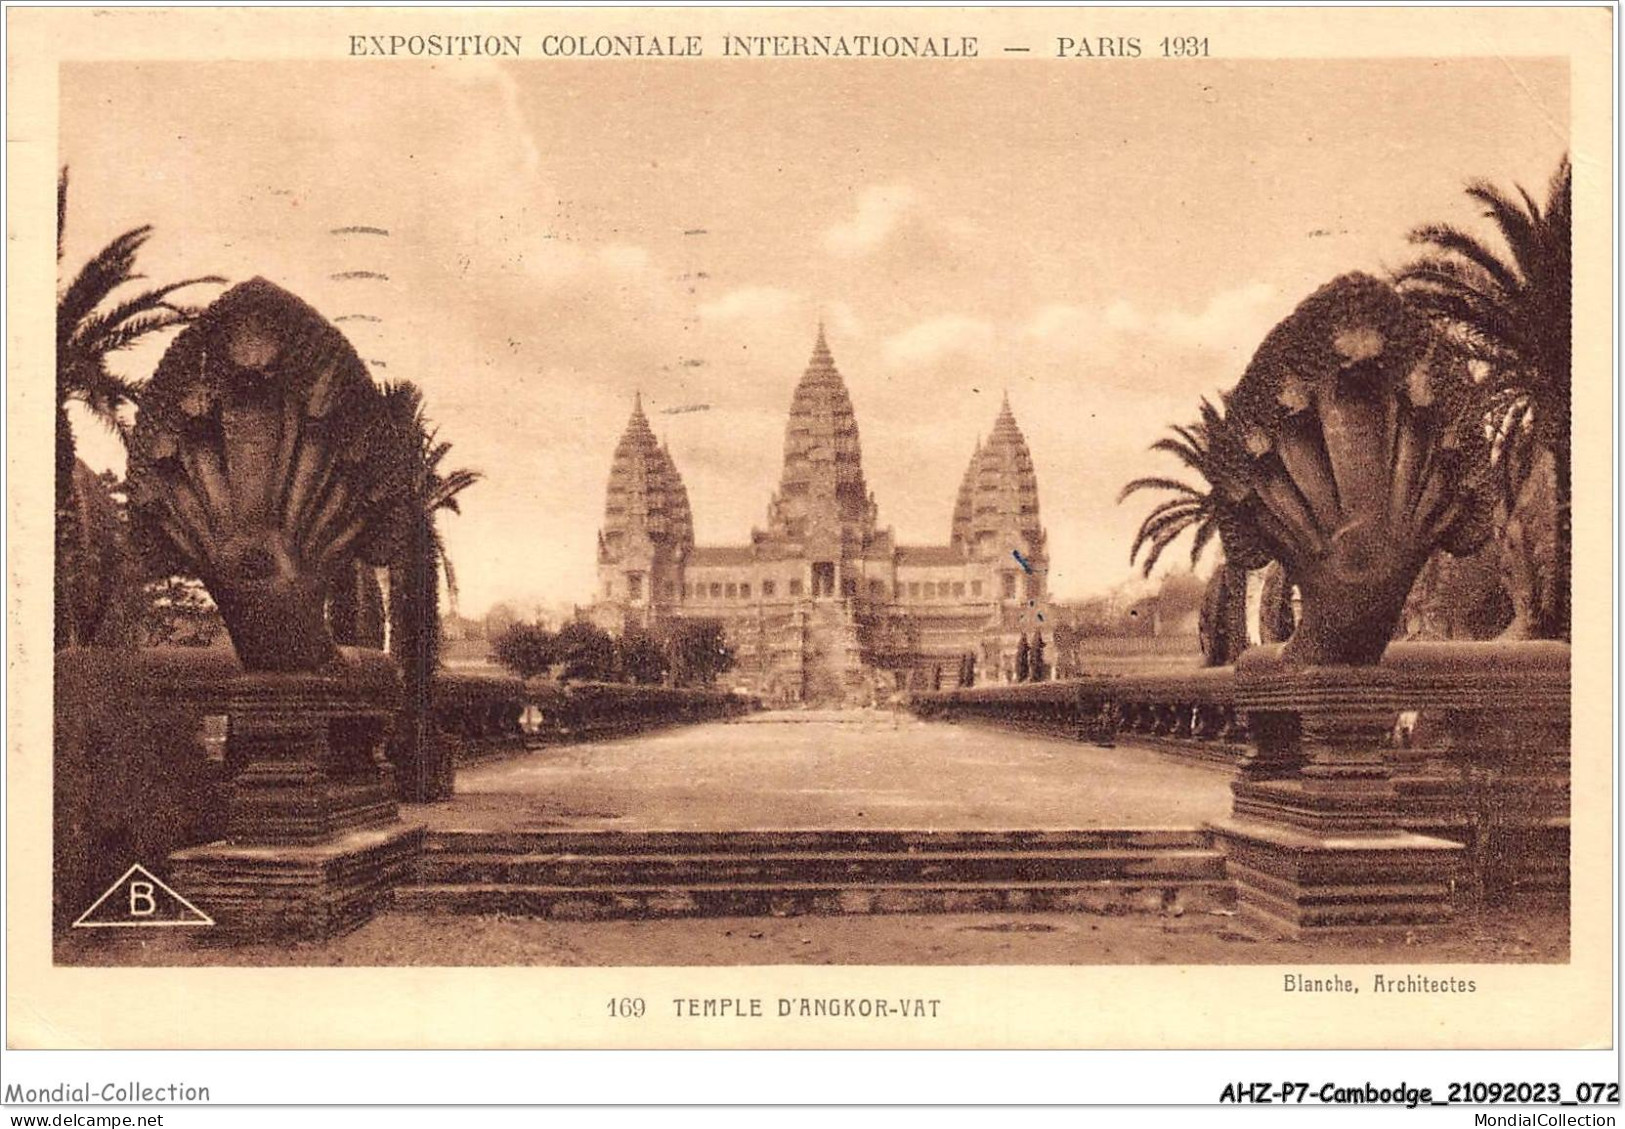 AHZP7-CAMBODGE-0632 - EXPOSITION COLONIALE INTERNATIONALE - PARIS 1931 - TEMPLE D'ANGKOR-VAT - Cambodia